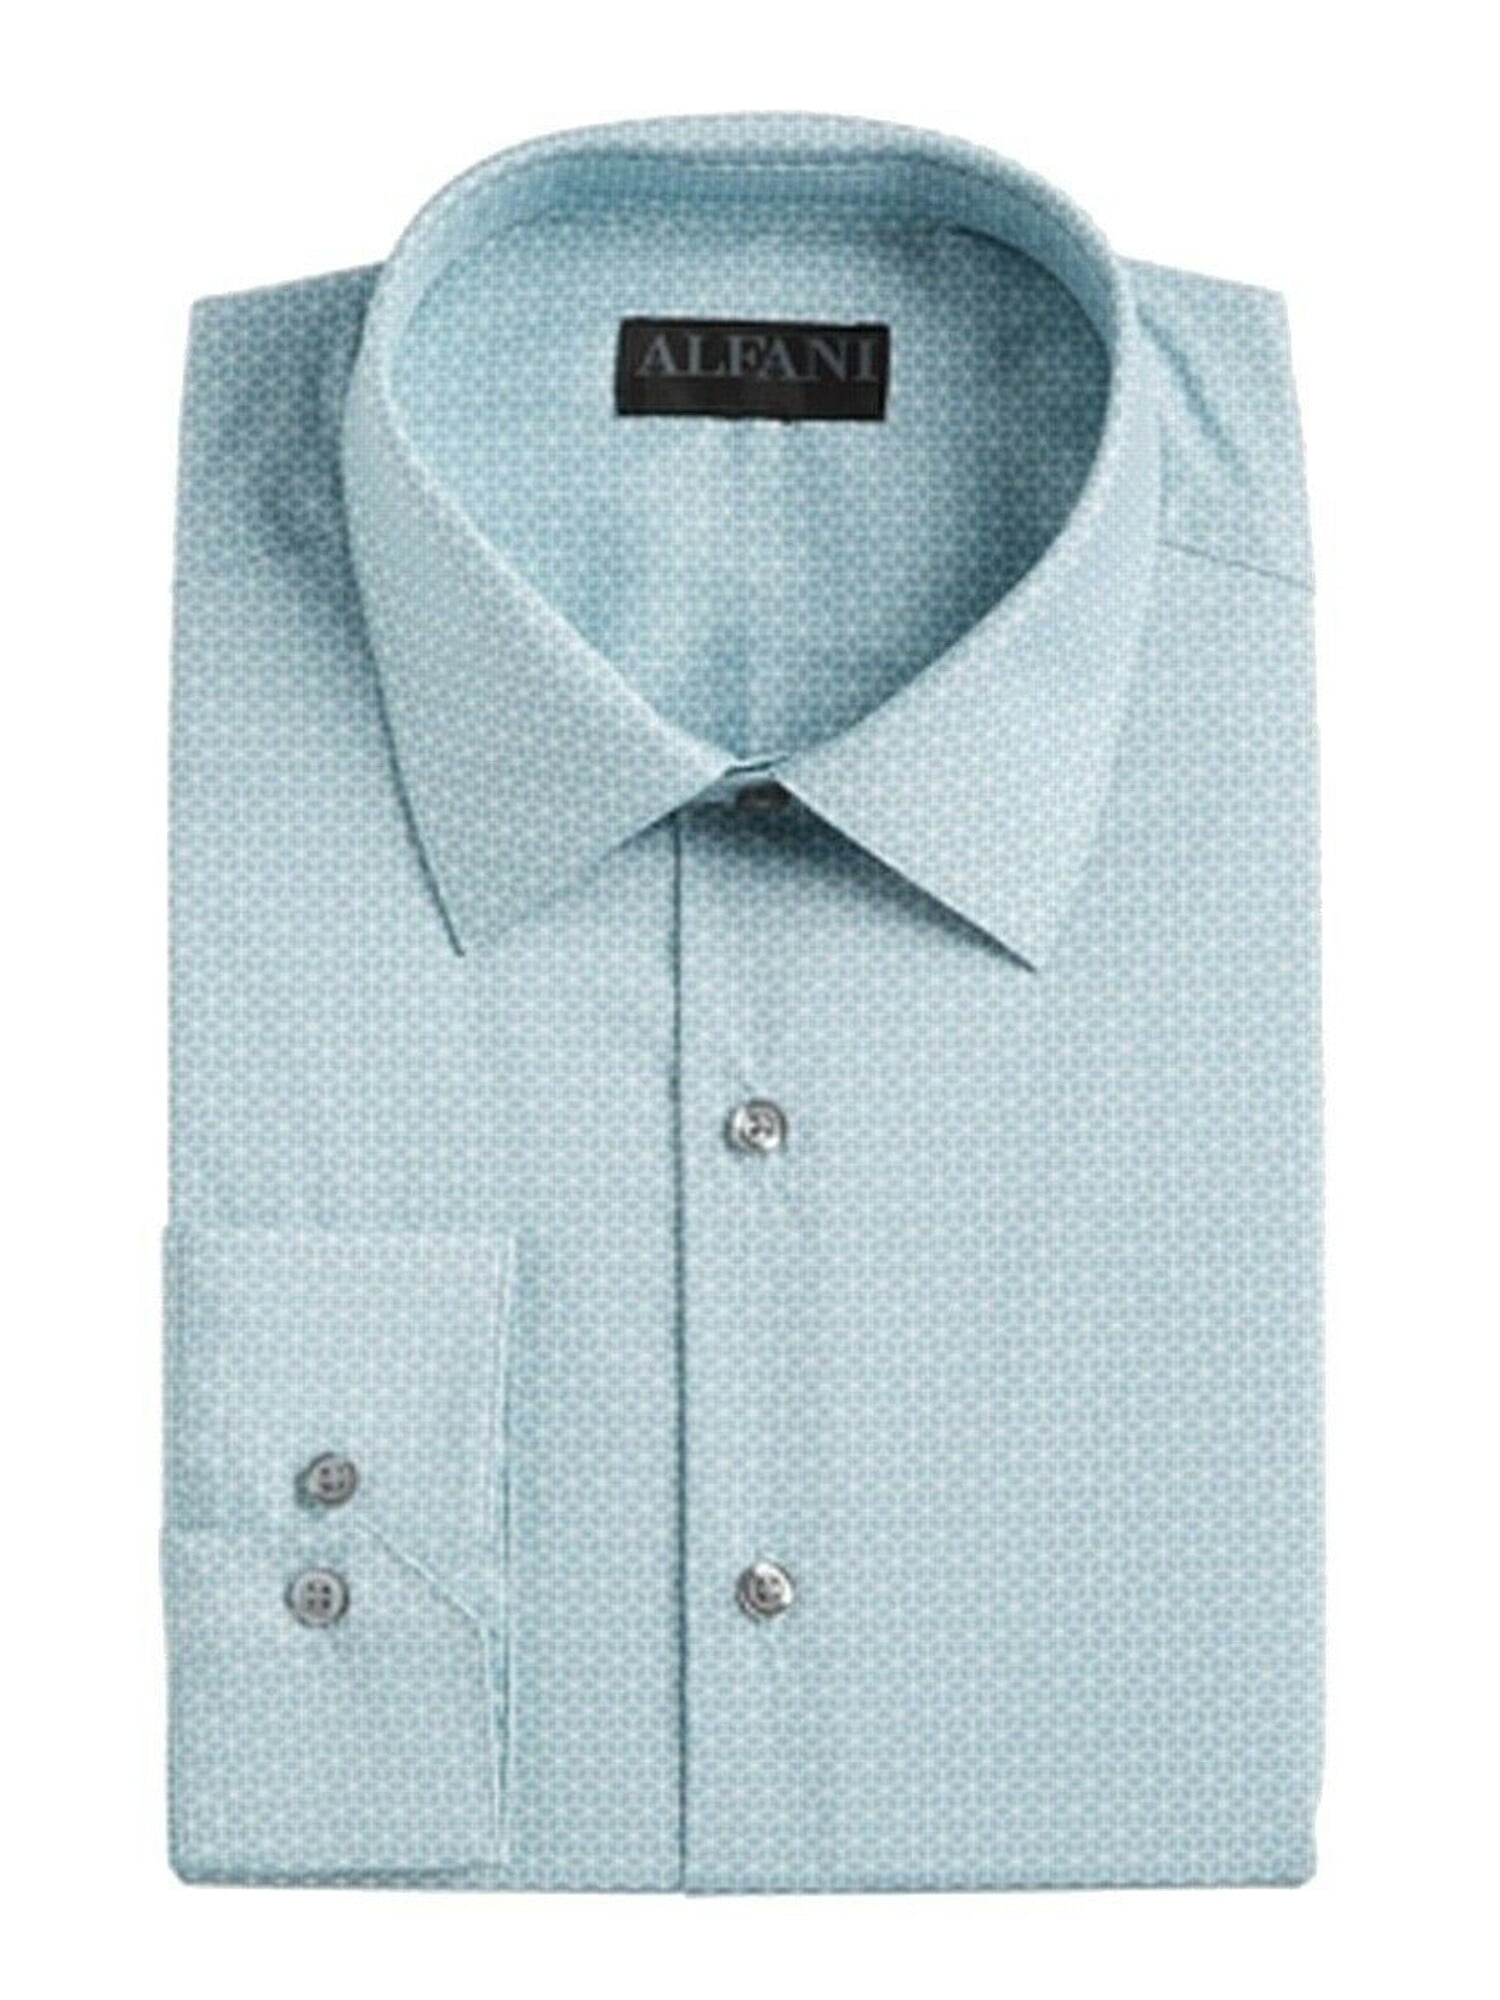 $95 ALFANI Men SLIM-FIT STRETCH WHITE POLKA-DOT BUTTON DRESS SHIRT 16-16.5 32/33 